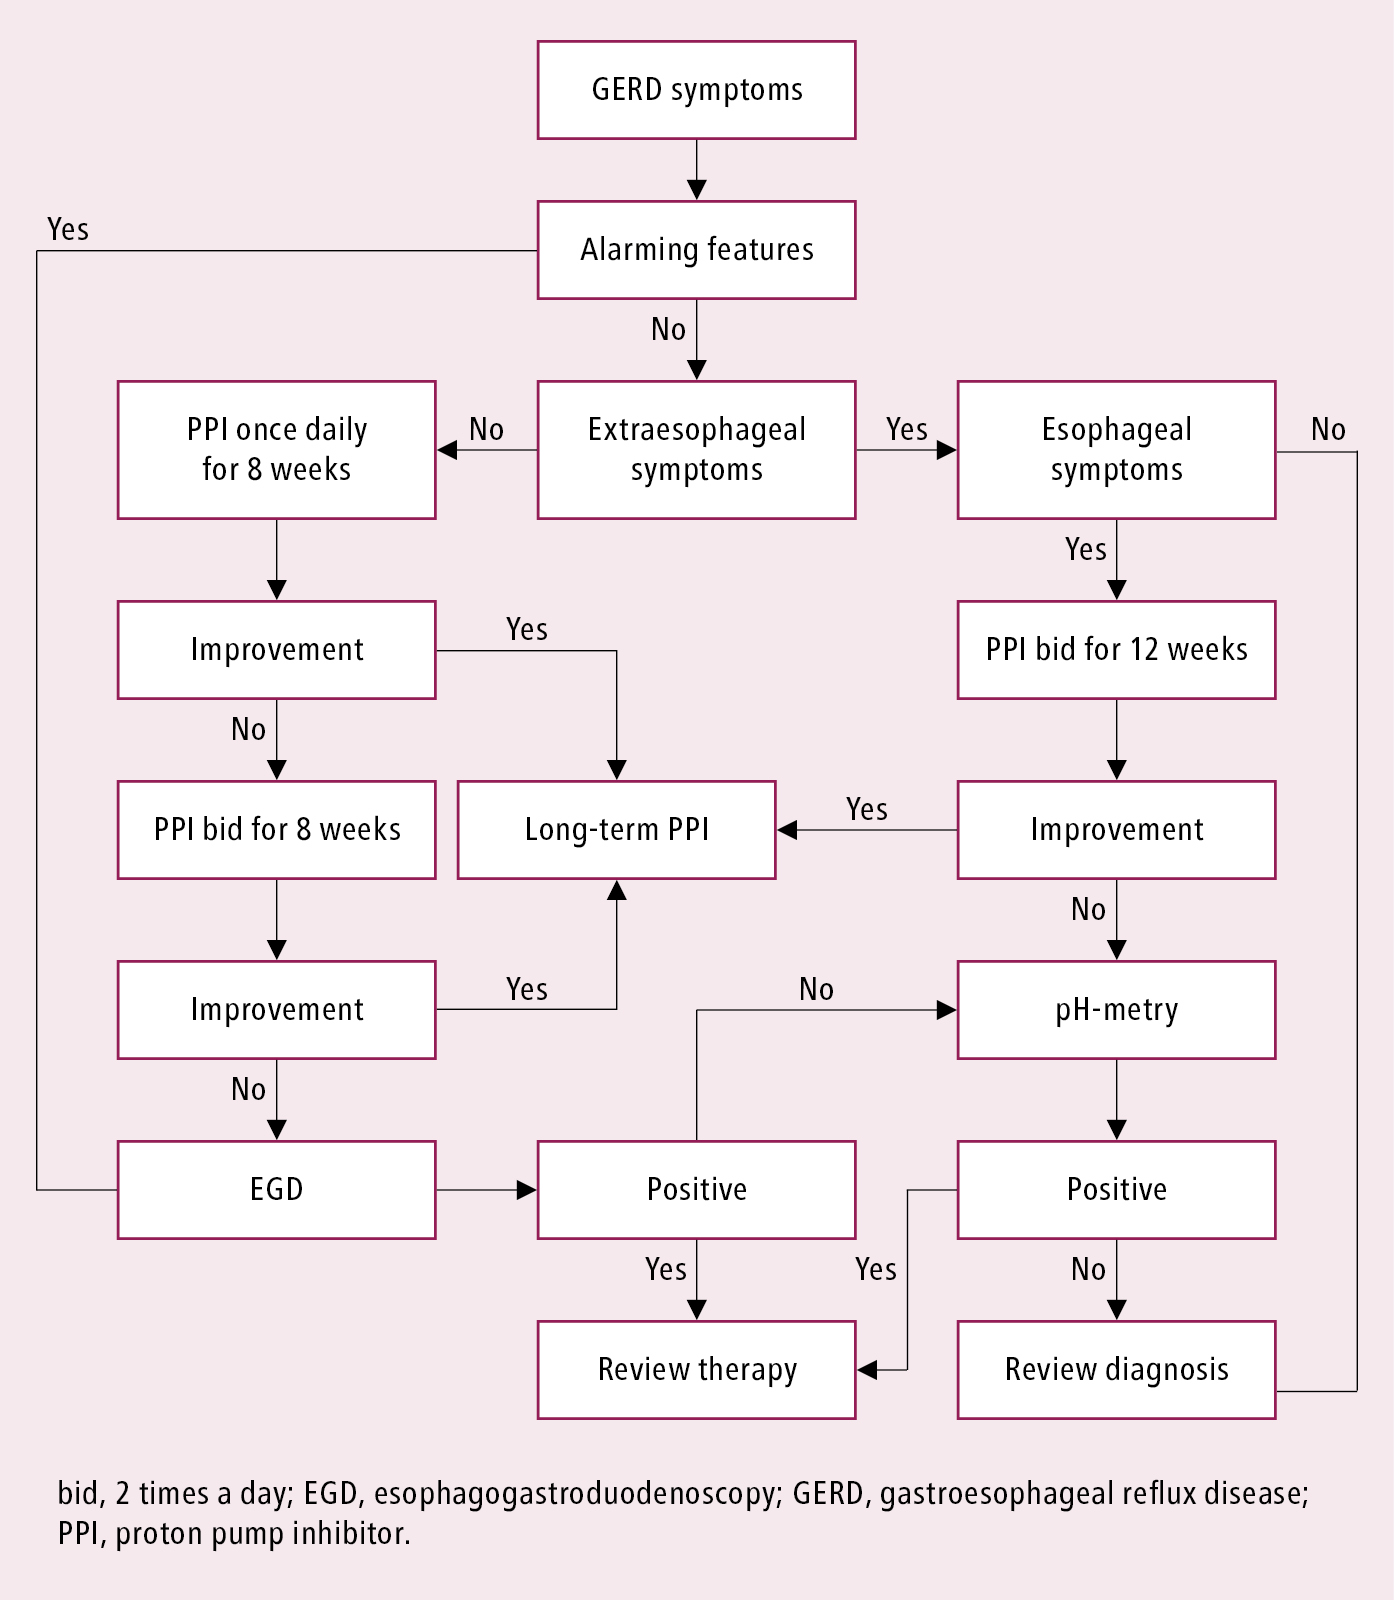 Figure 031_9854.  Initial diagnostic management algorithm for gastroesophageal reflux disease. 